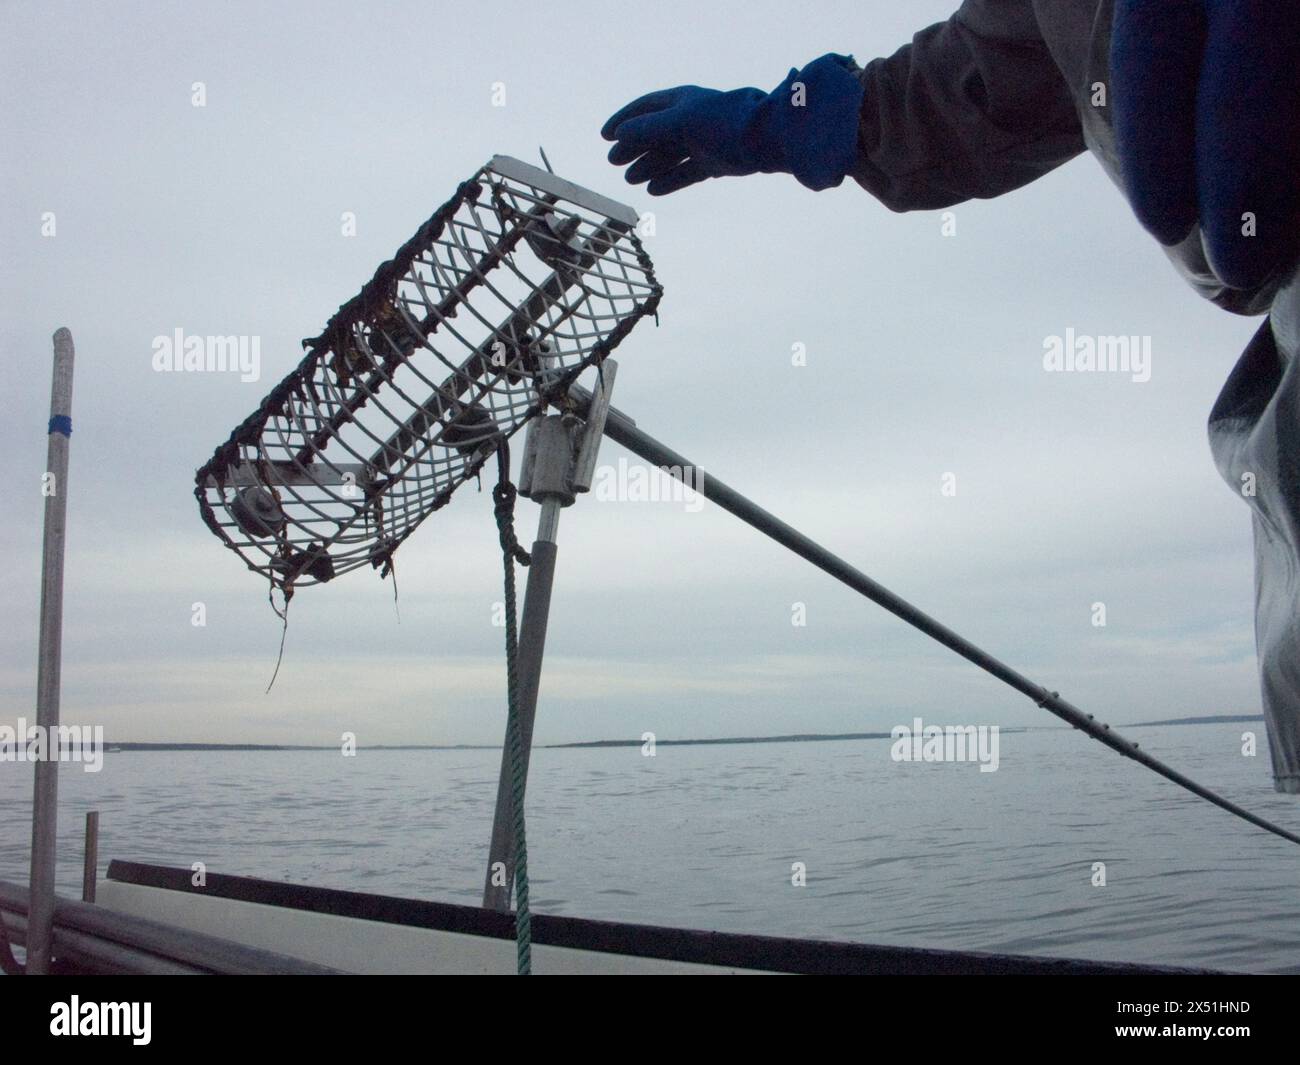 At sunrise, Quahogger Bill Bergan reaches for the rake he uses raking for clams in Narragansett Bay Stock Photo